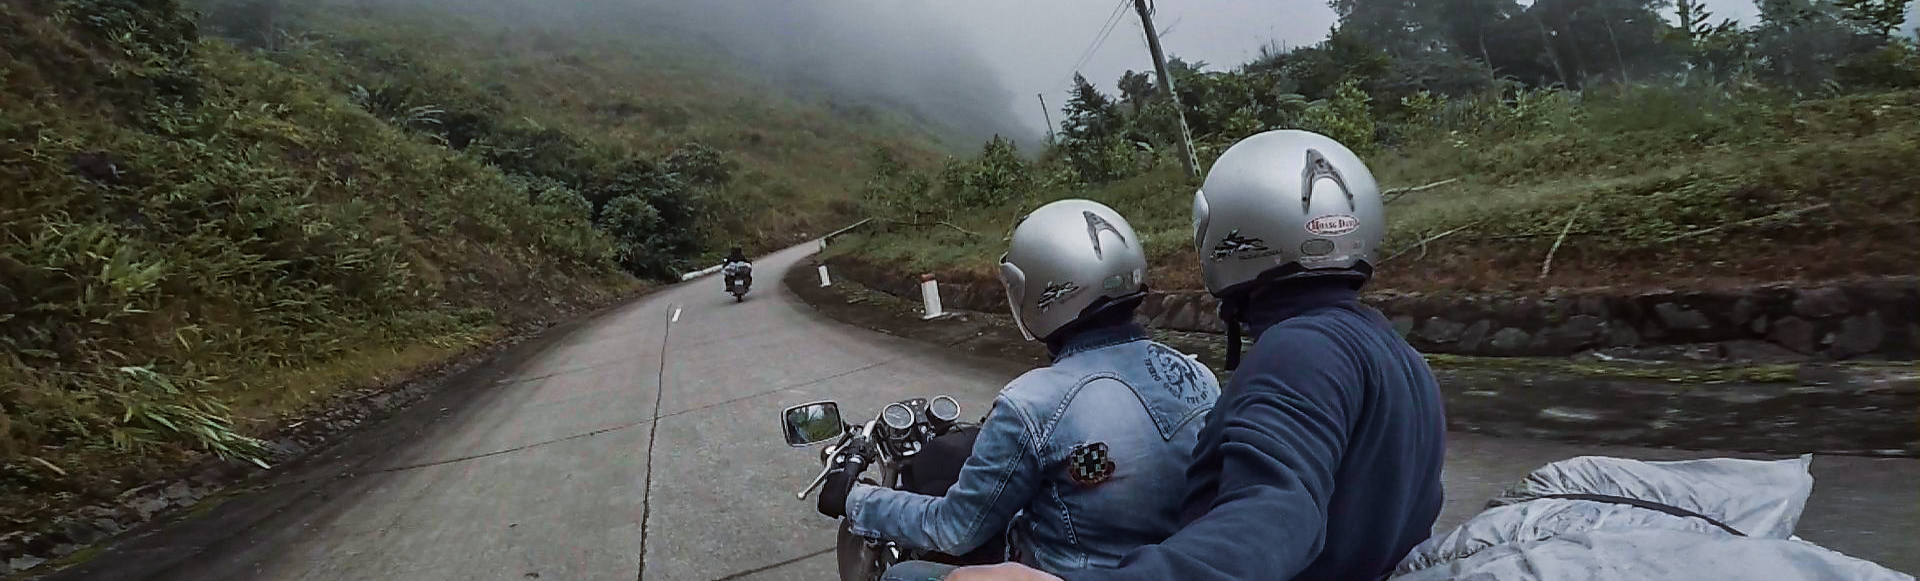 Easy Rider Mogroach Vietnam